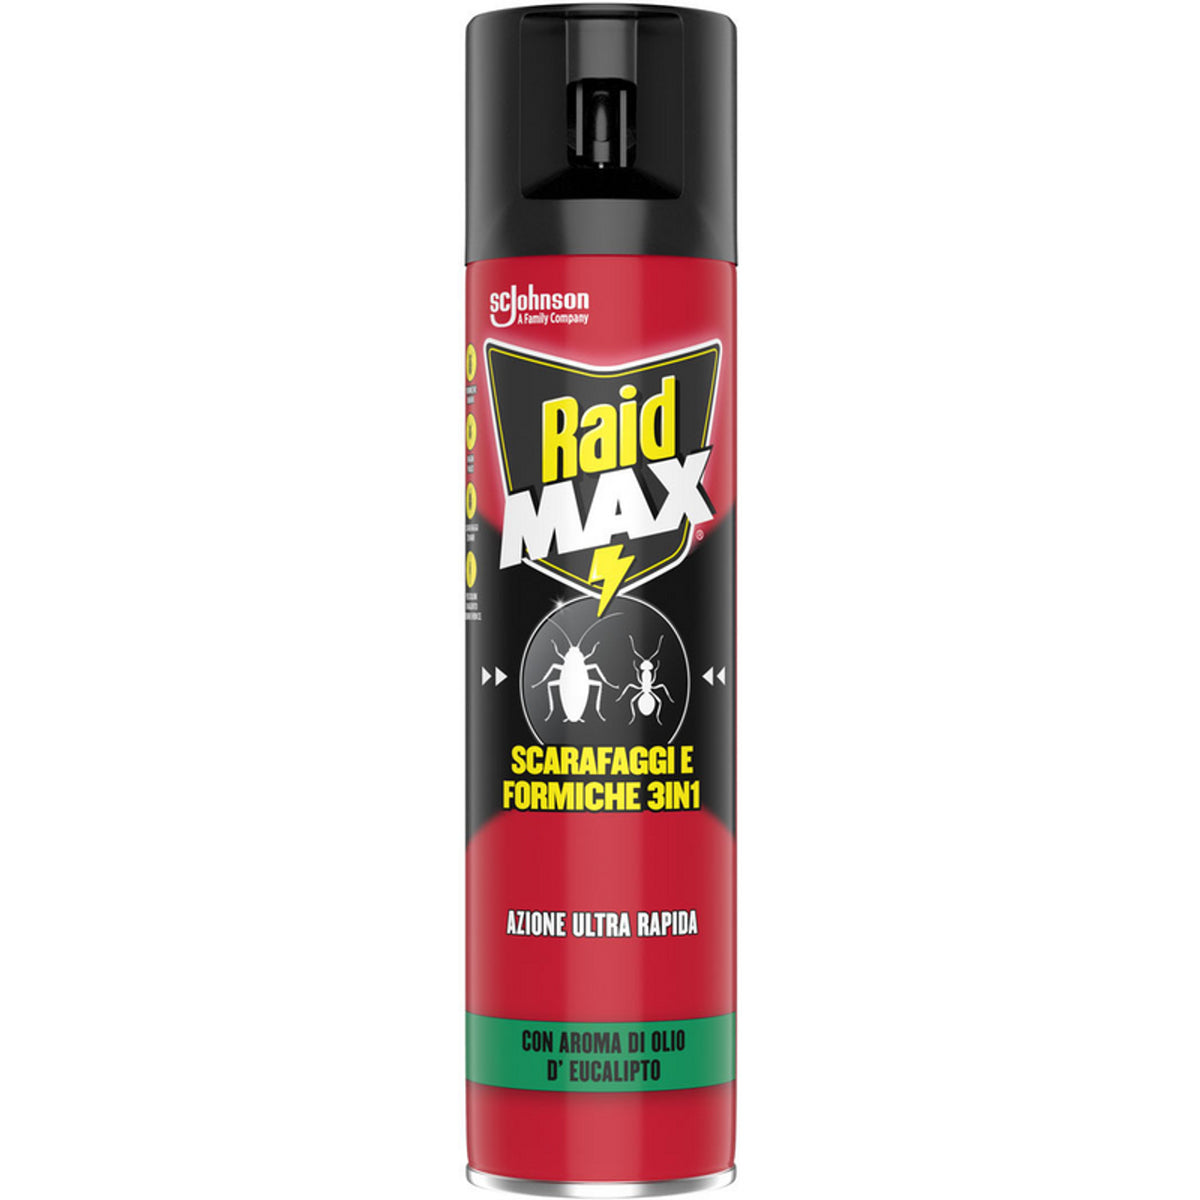 RAID Max insecticide spray kakkerlakken en mieren 3in1 ultra snelle werking met aroma van eucalyptusolie 400 ml